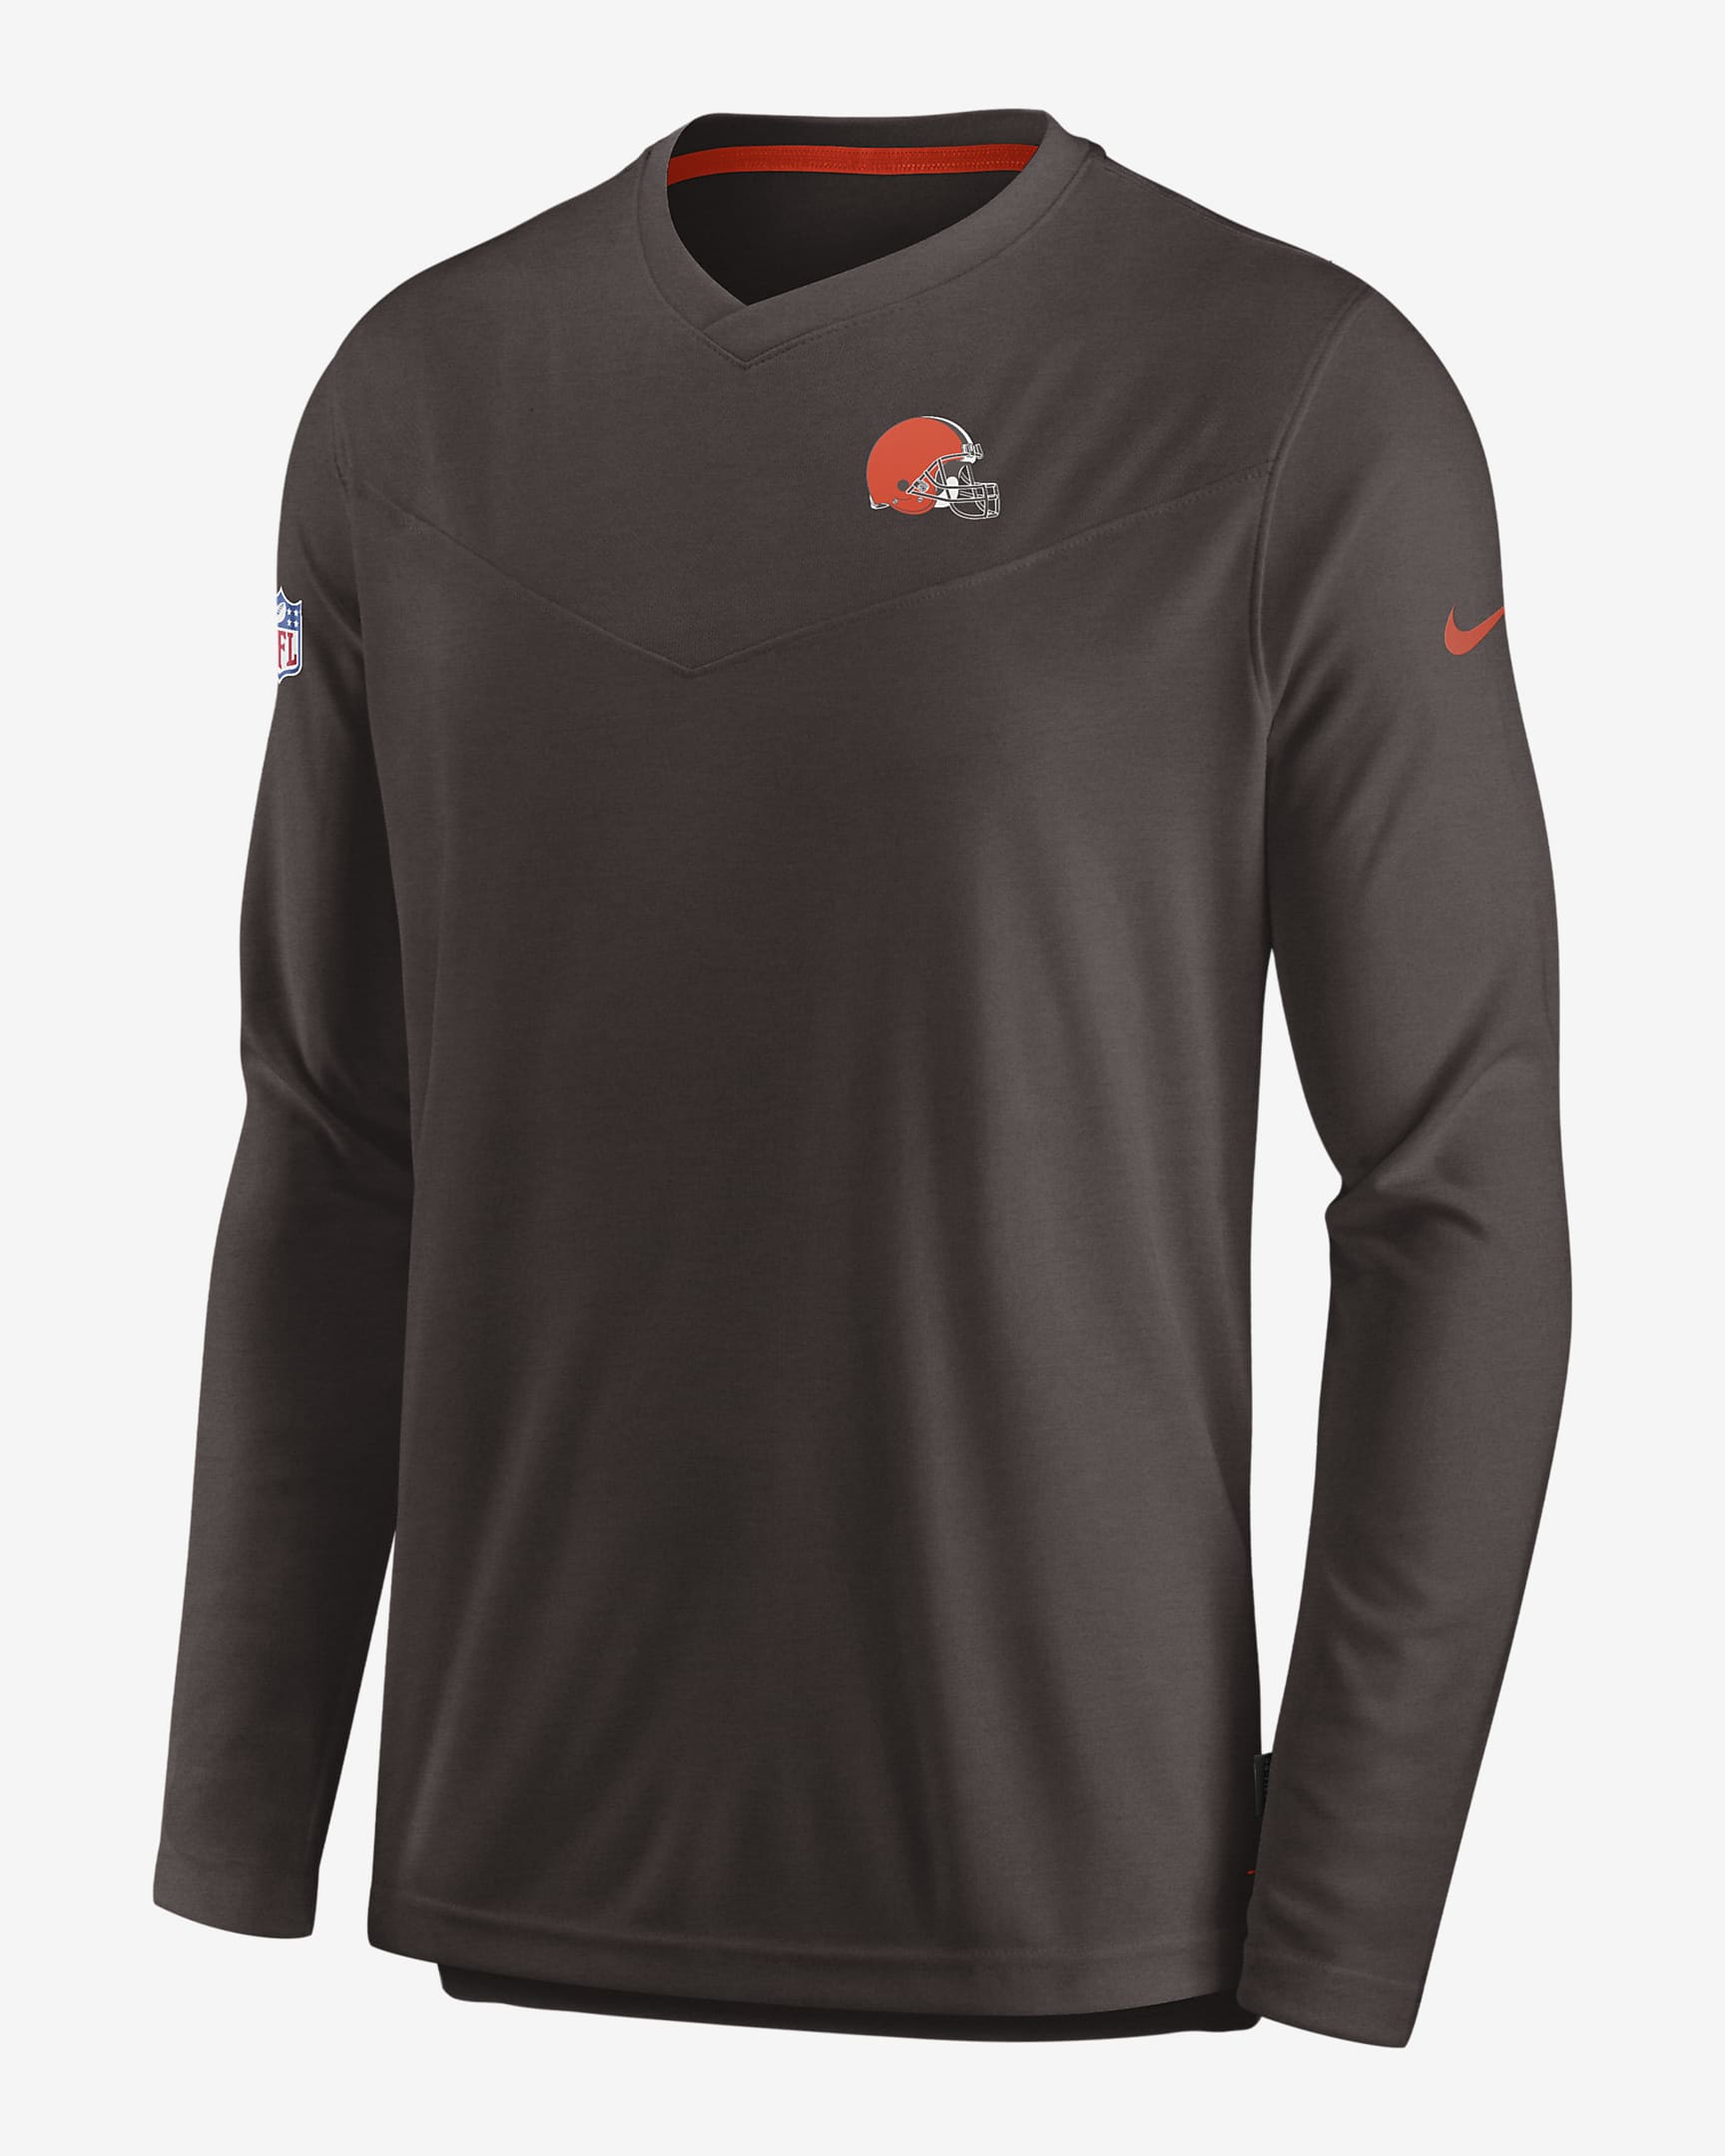 Nike Dri-FIT Lockup Coach UV (NFL Cleveland Browns) Men's Long-Sleeve ...